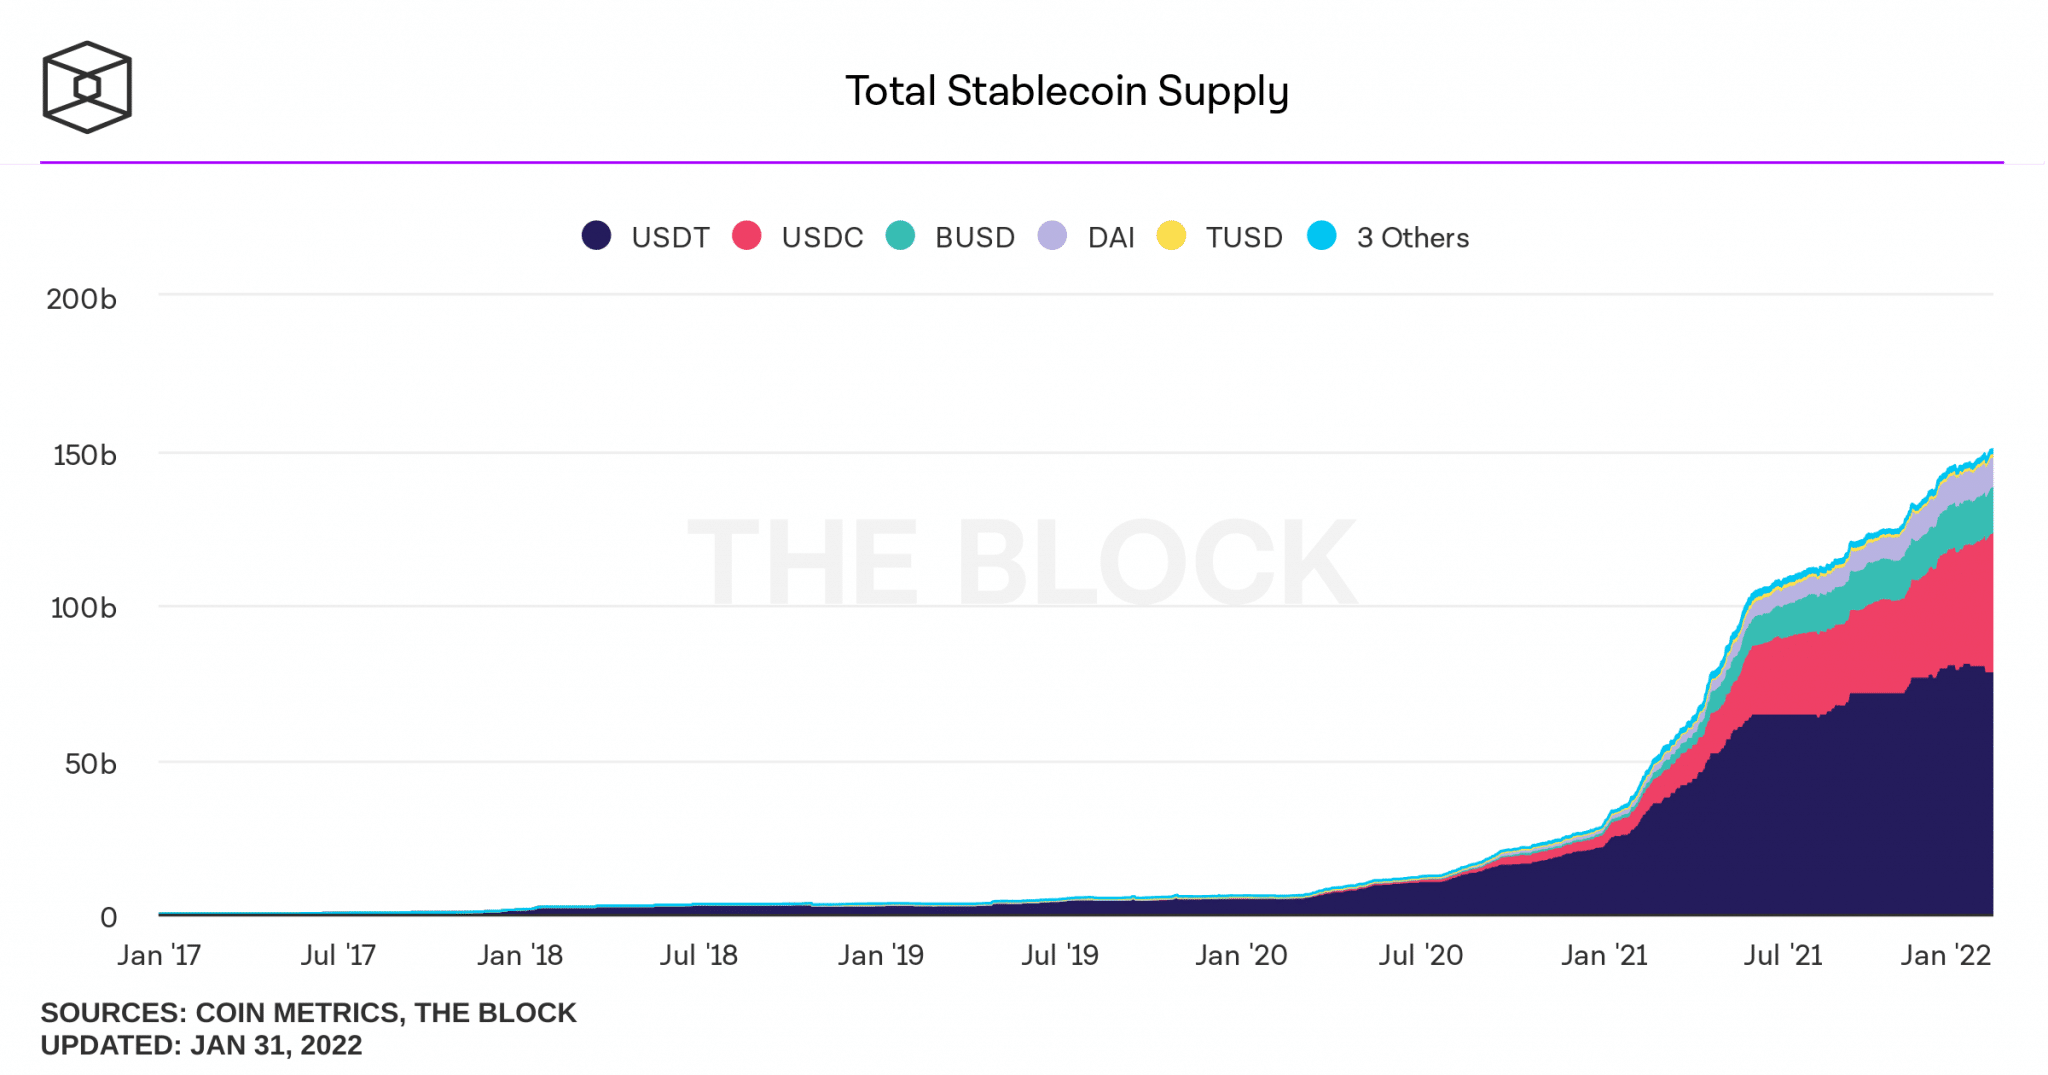 Evolución de la oferta de stablecoin (Fuente: The Block)